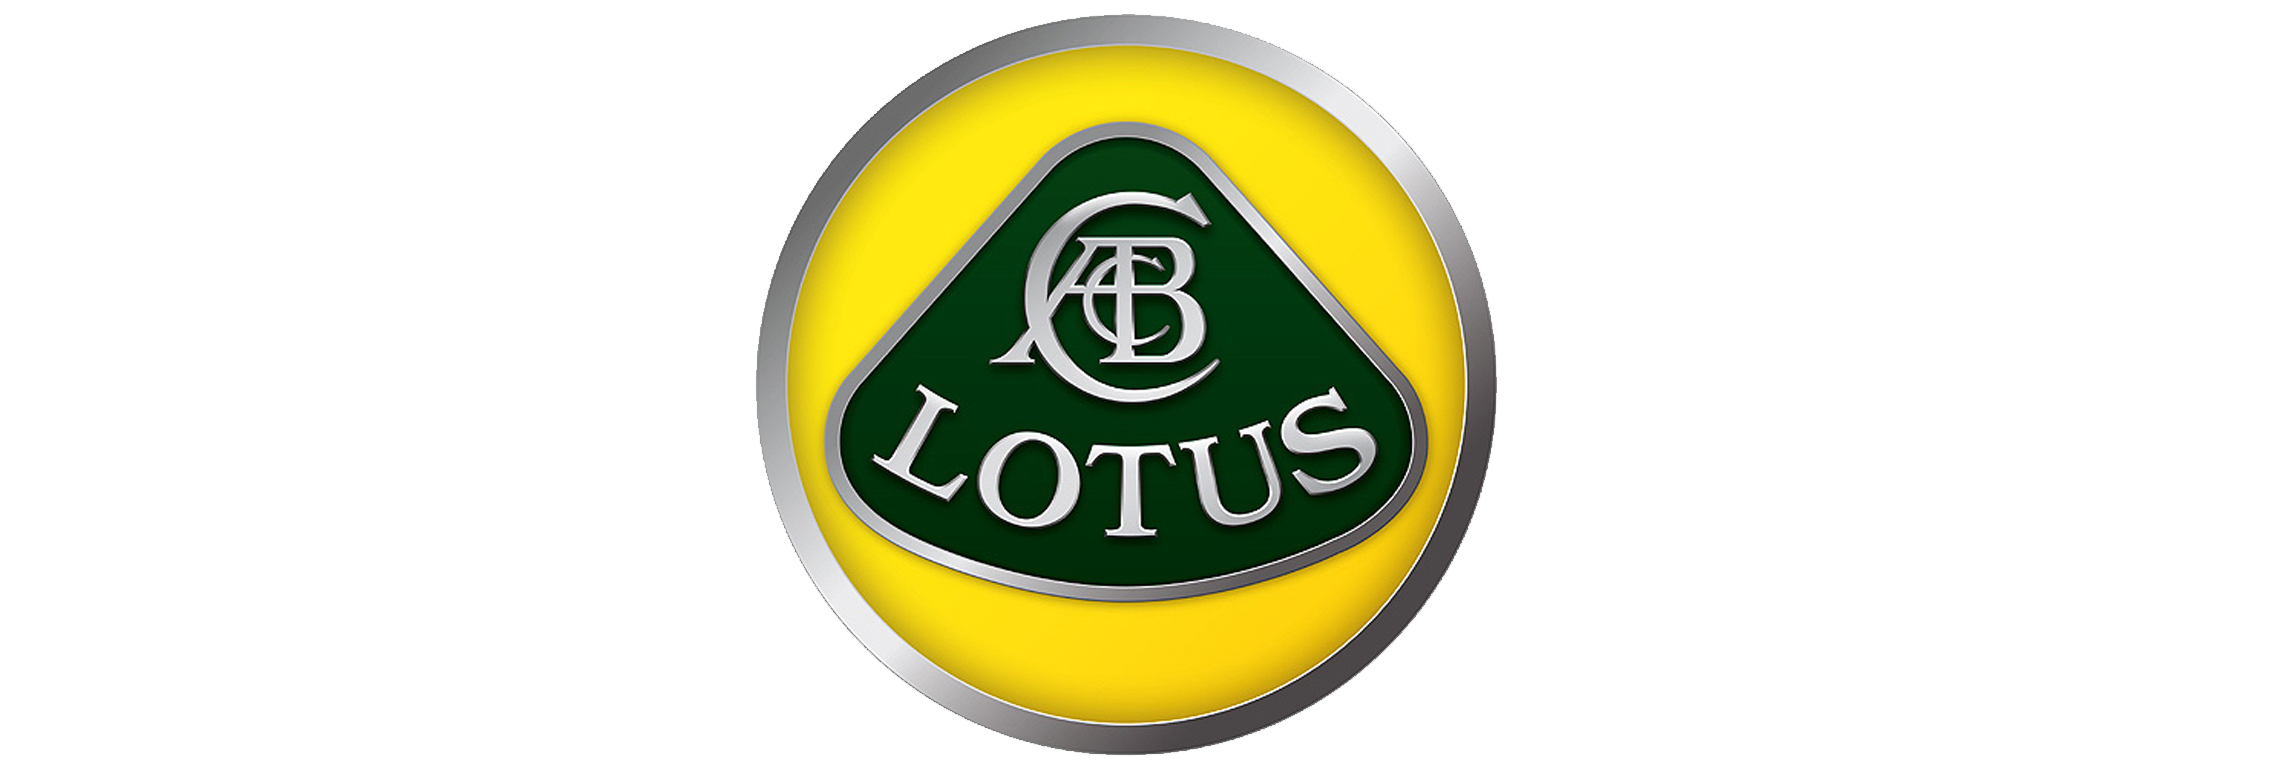 Lotus Logo Transparent Background